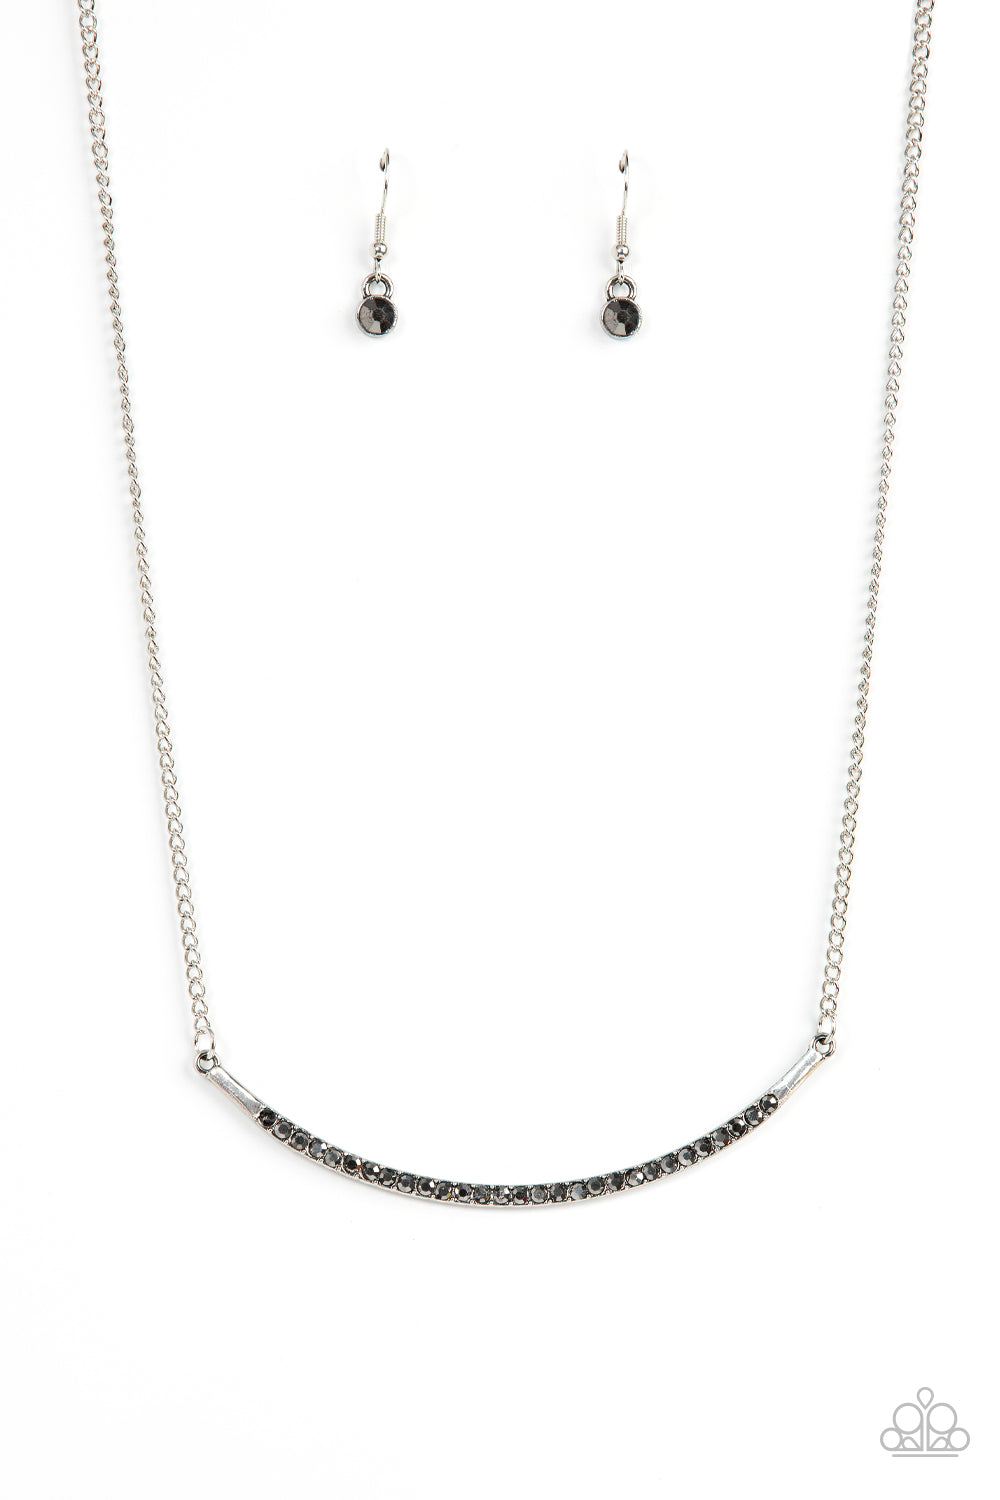 Collar Poppin Sparkle - Silver Necklace Set - Princess Glam Shop